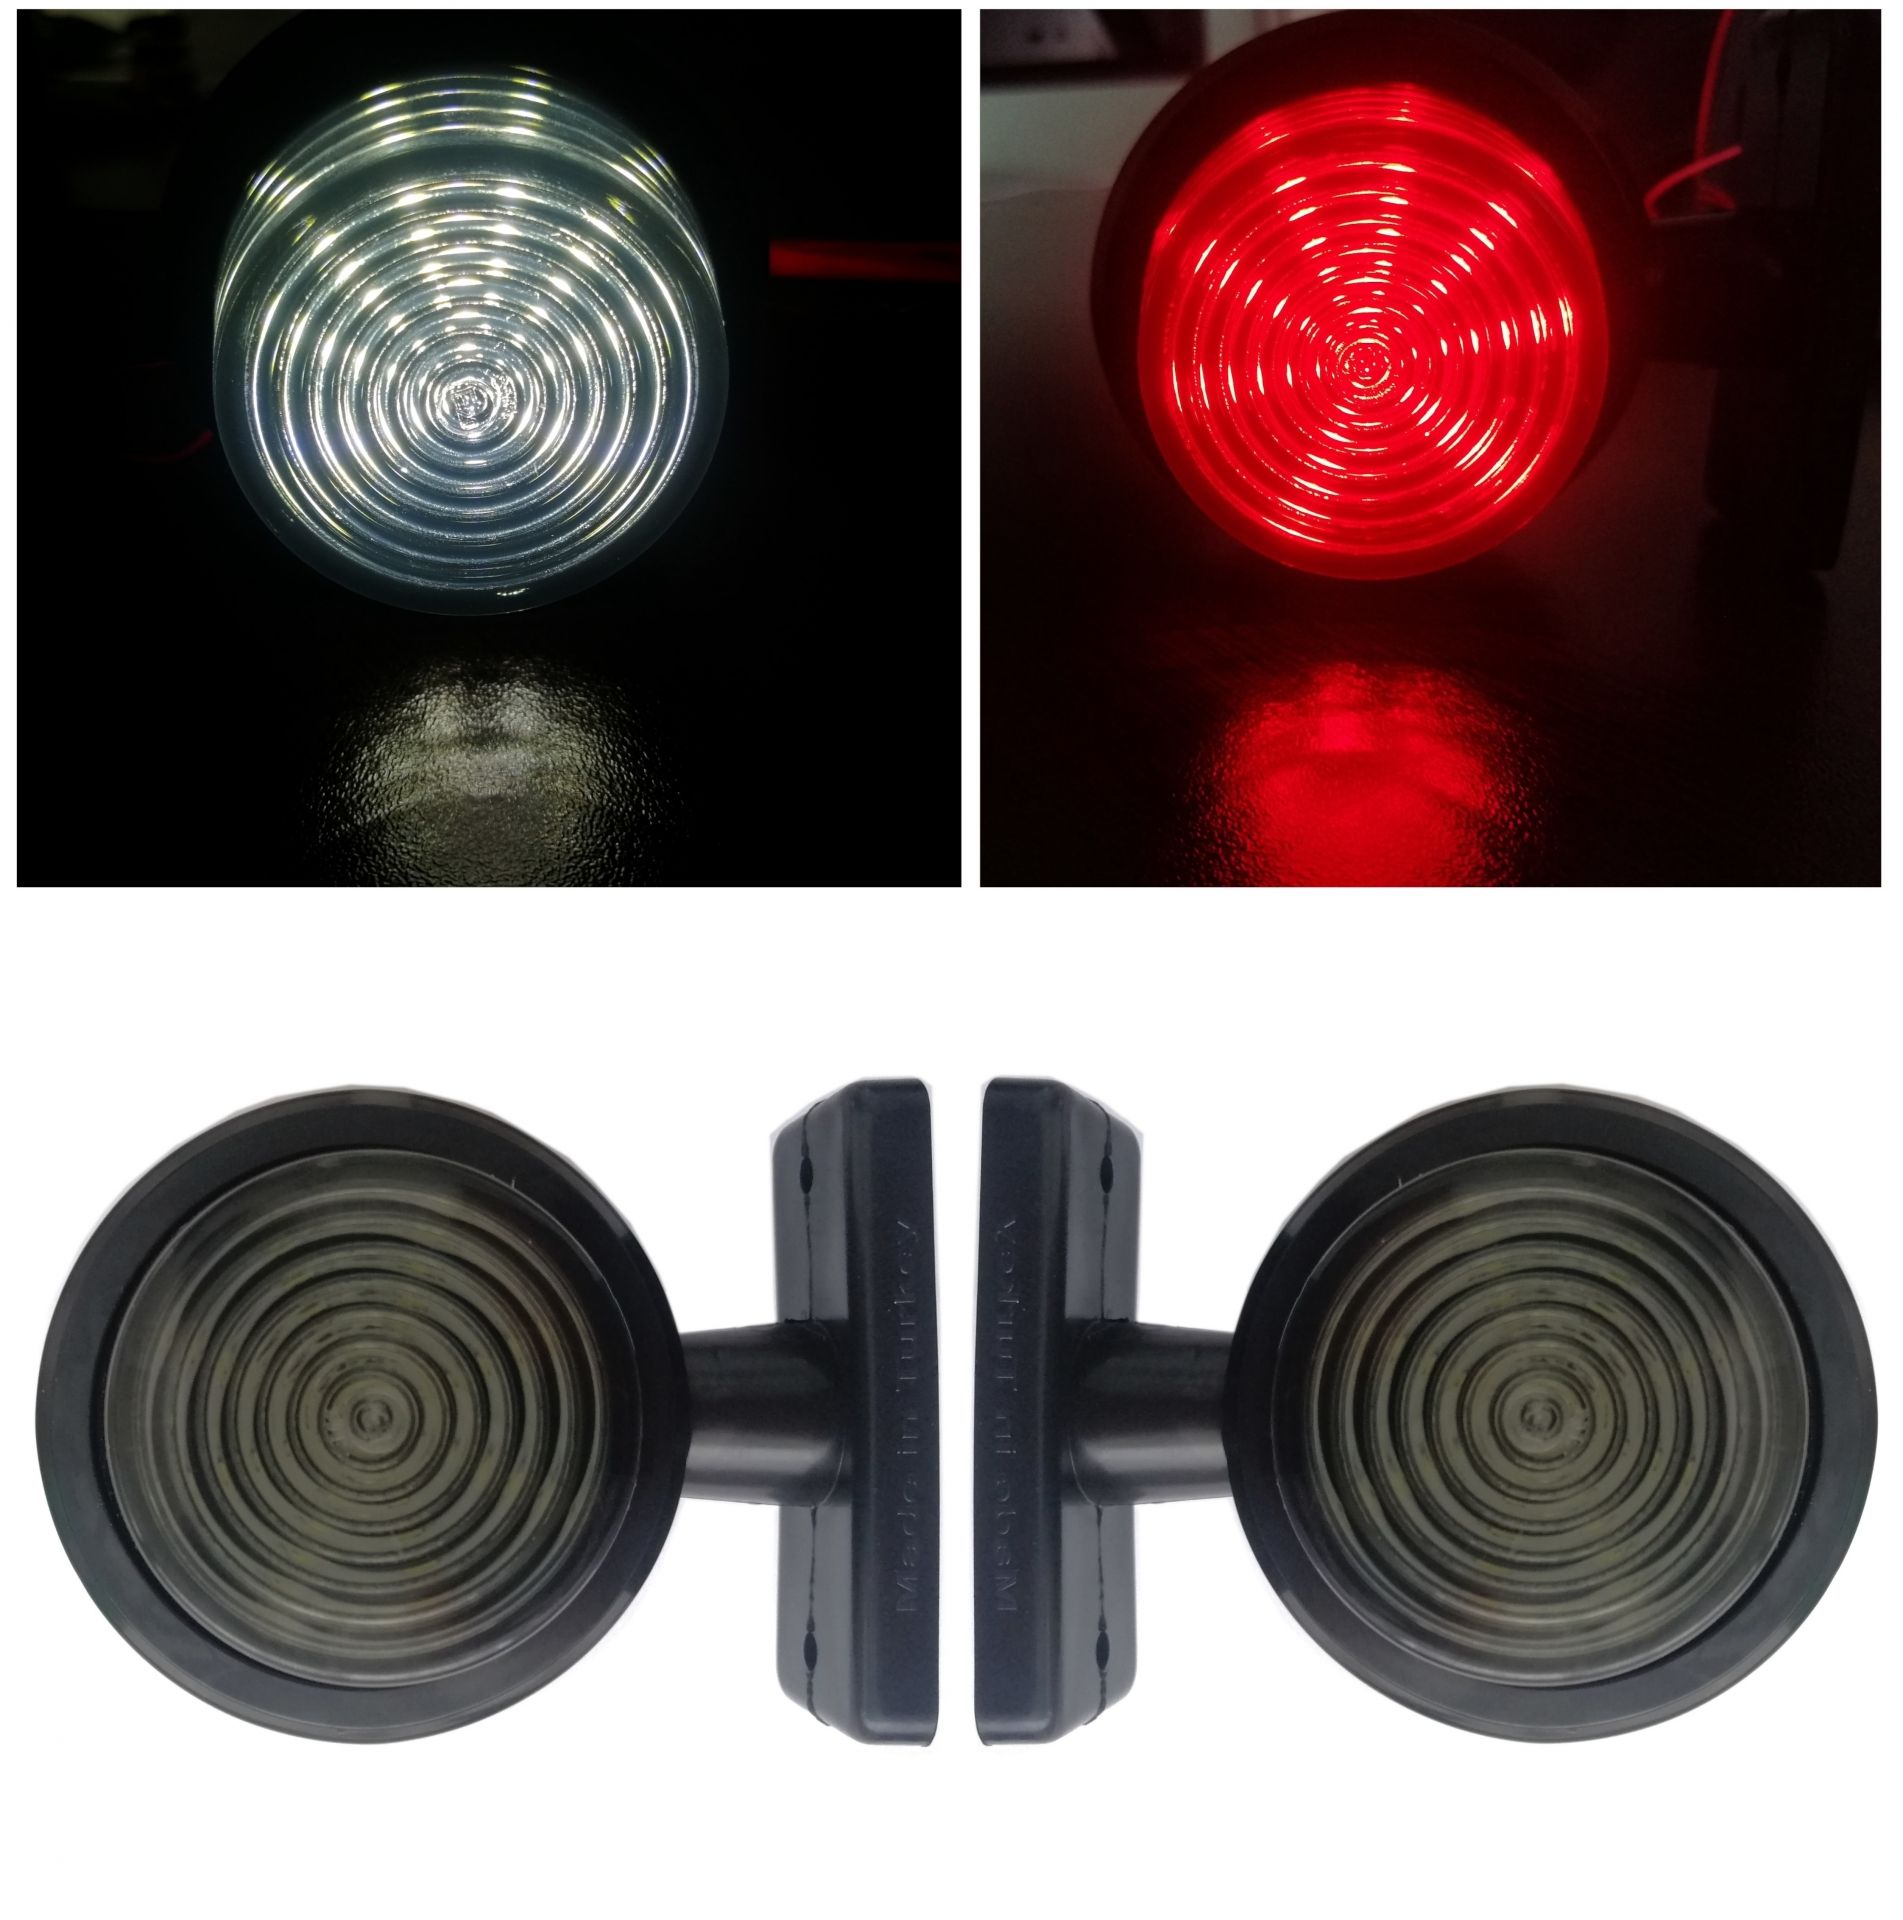 2 x LED Feux de Gabarit Lateral Lampe Remorque Camion Bus Rouge Blanc 12V 24V